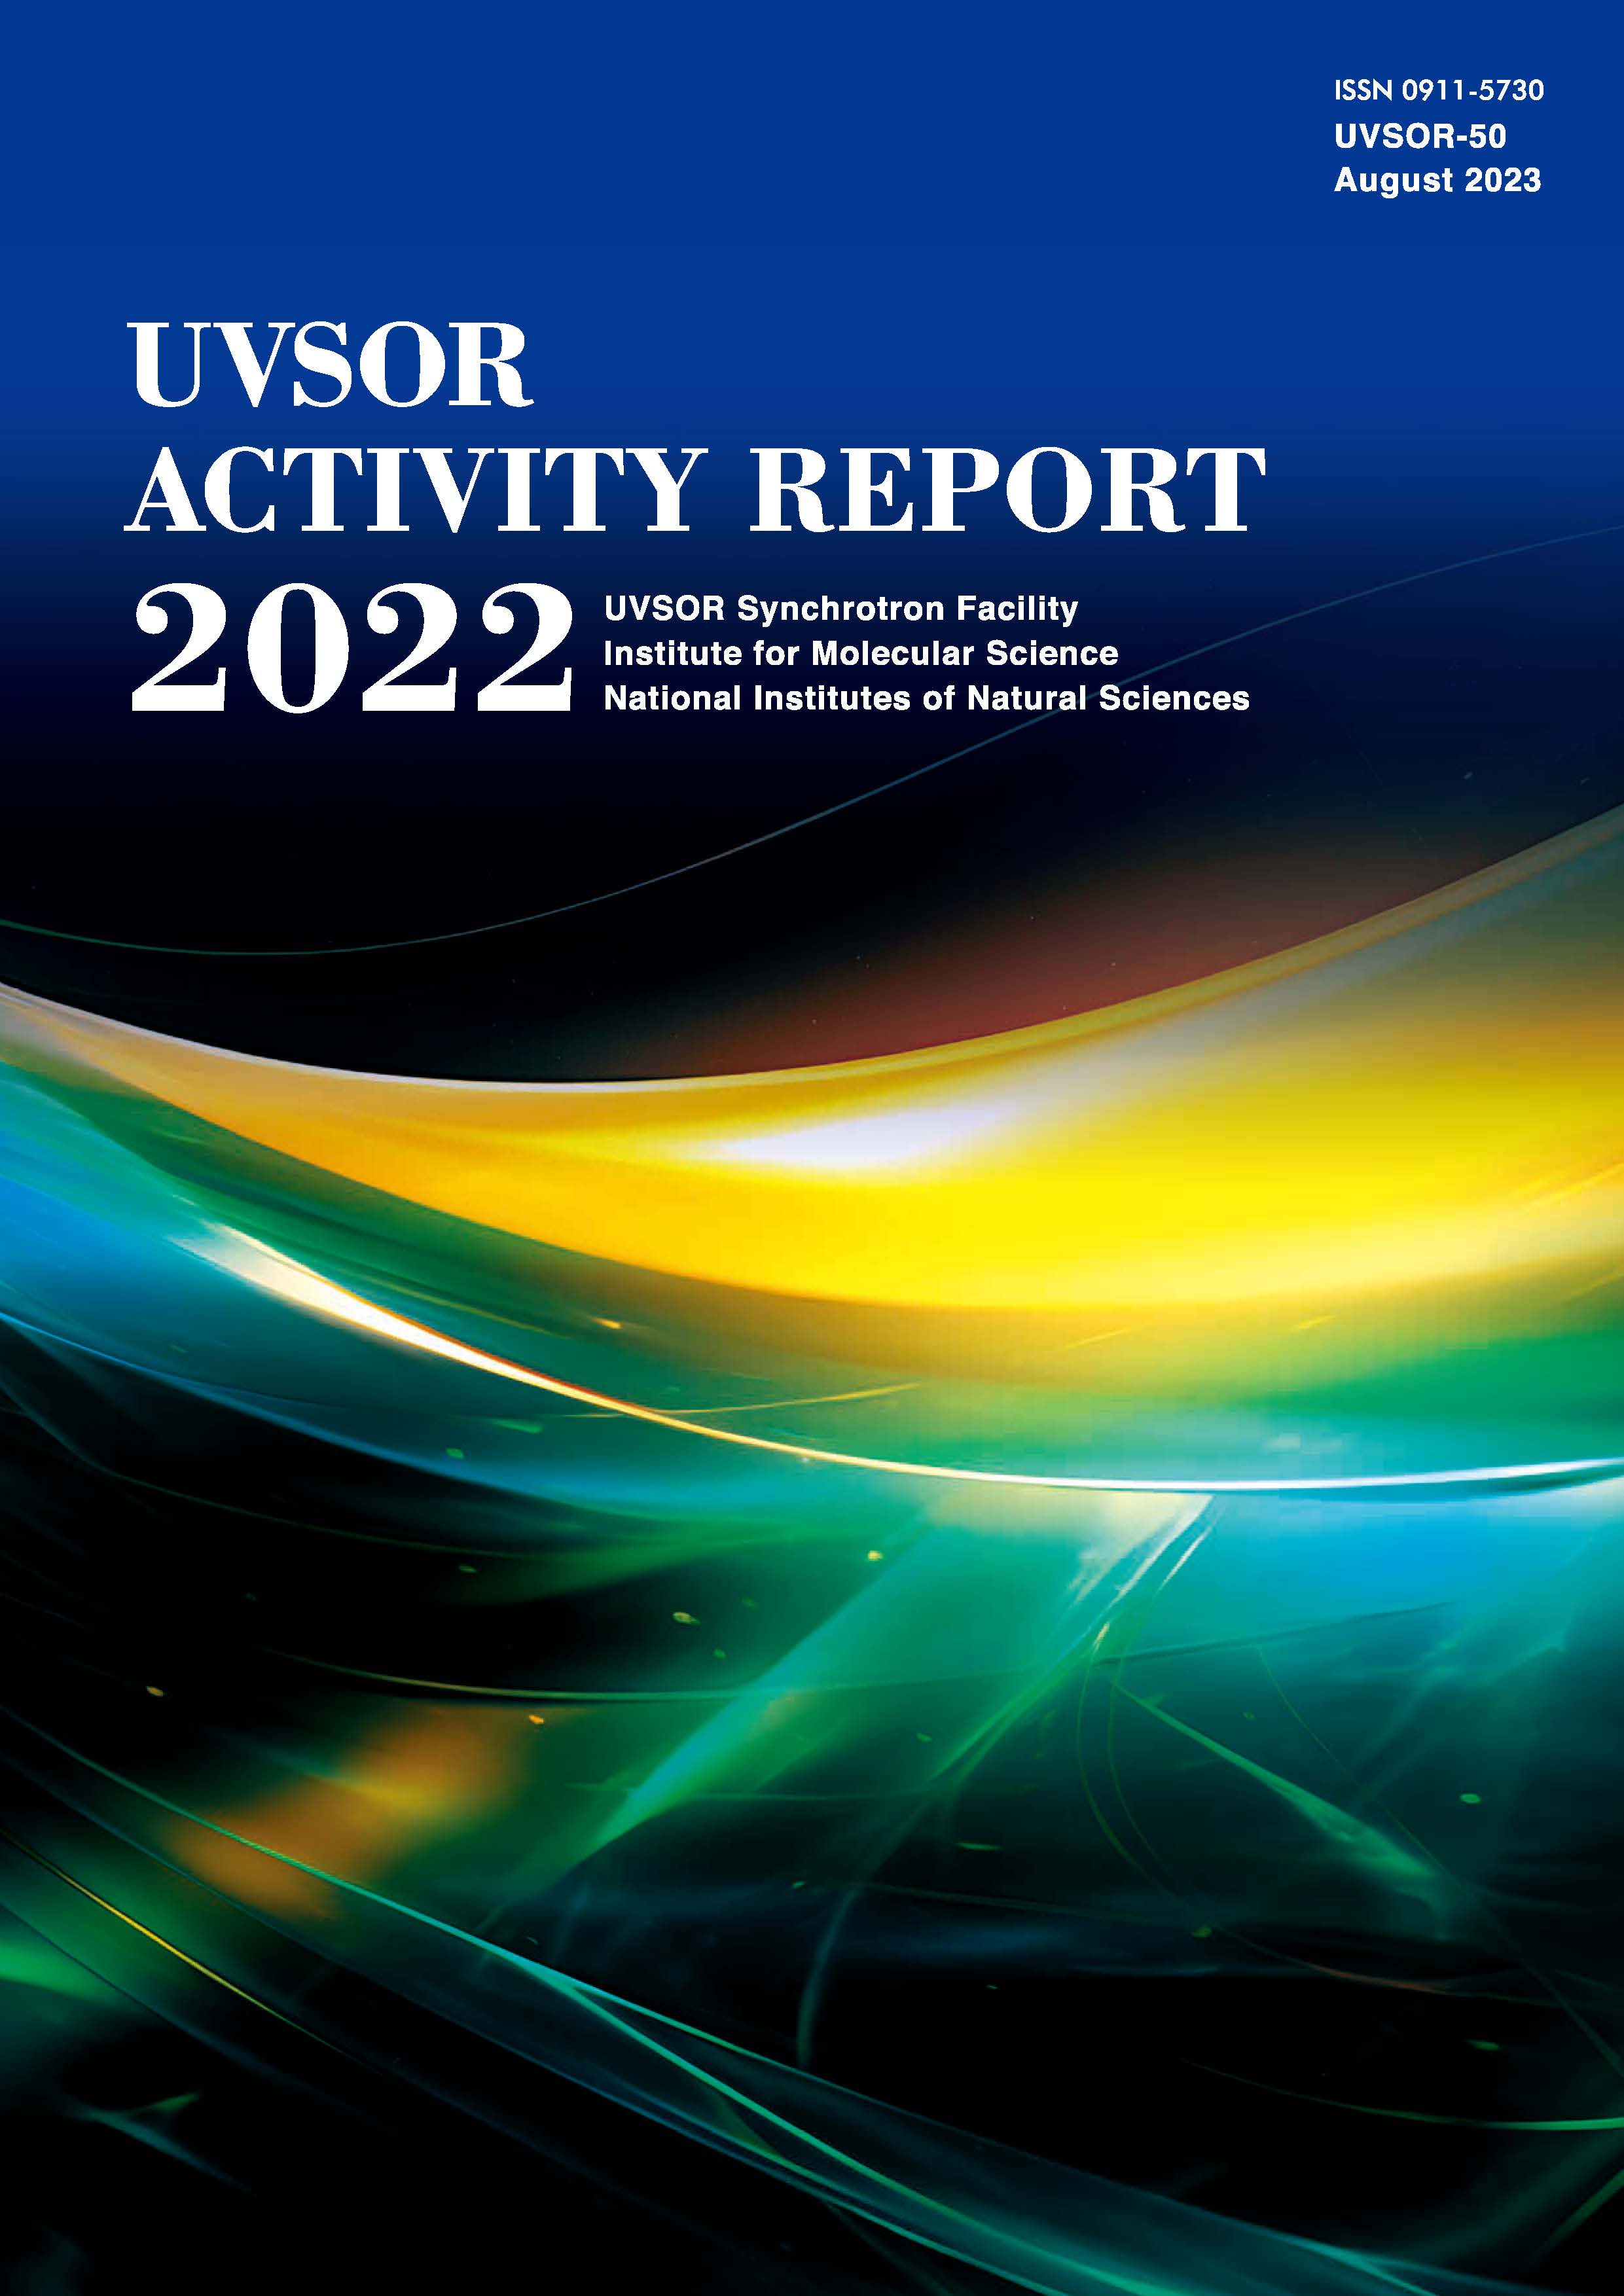 Activity Report 2022